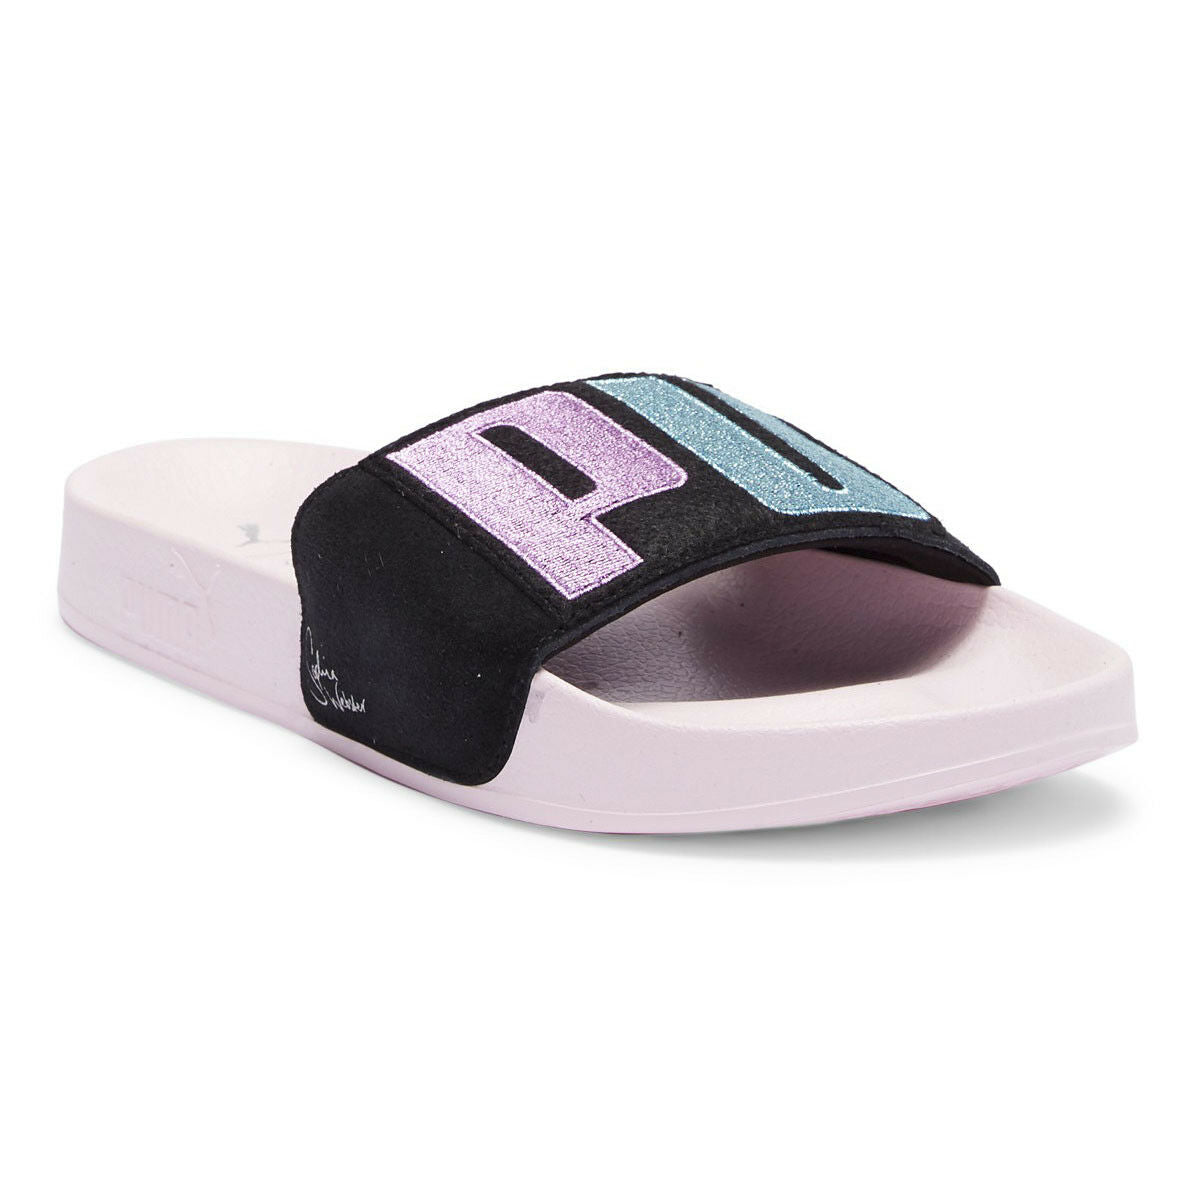 Sophia Webster X Puma Parfait Pink Black Suede Leadcat Slide Sandals 7.5 NIB